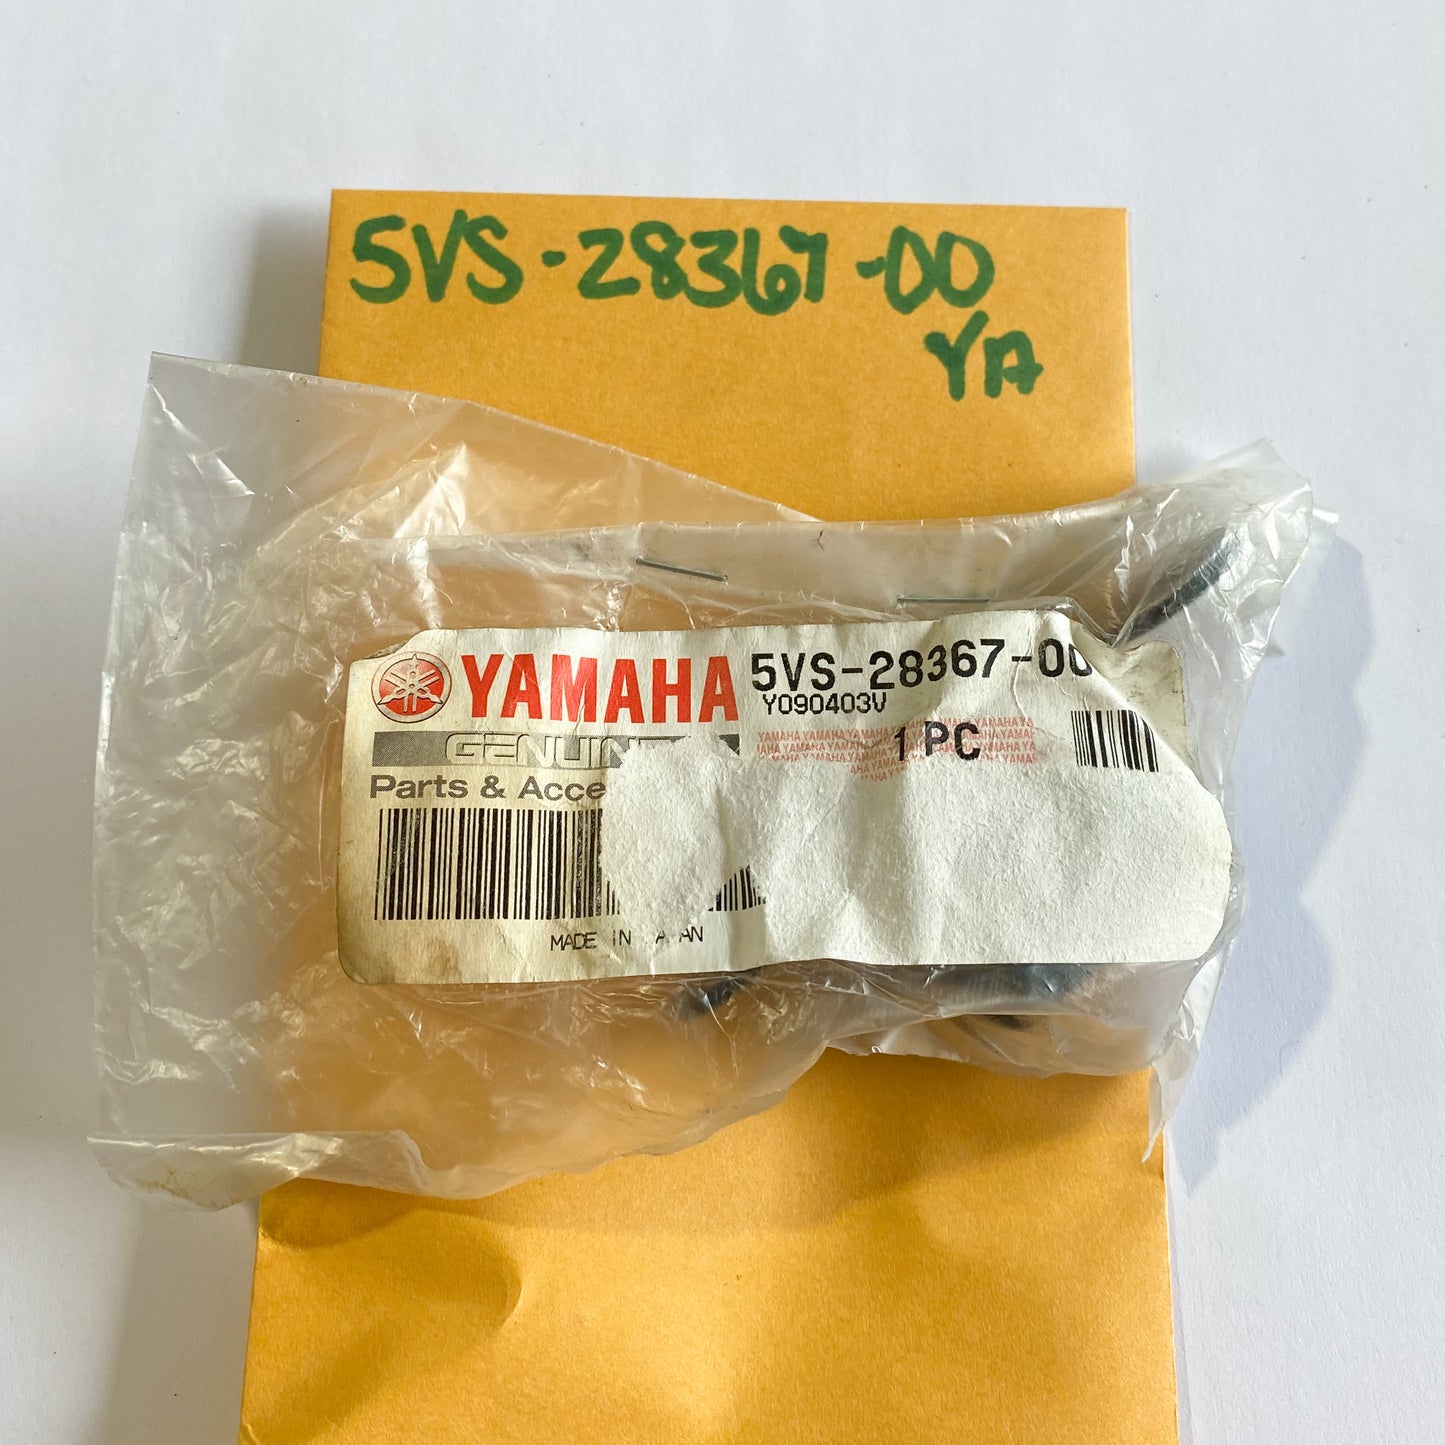 YAMAHA BRACKET 5VS-28367-00-00